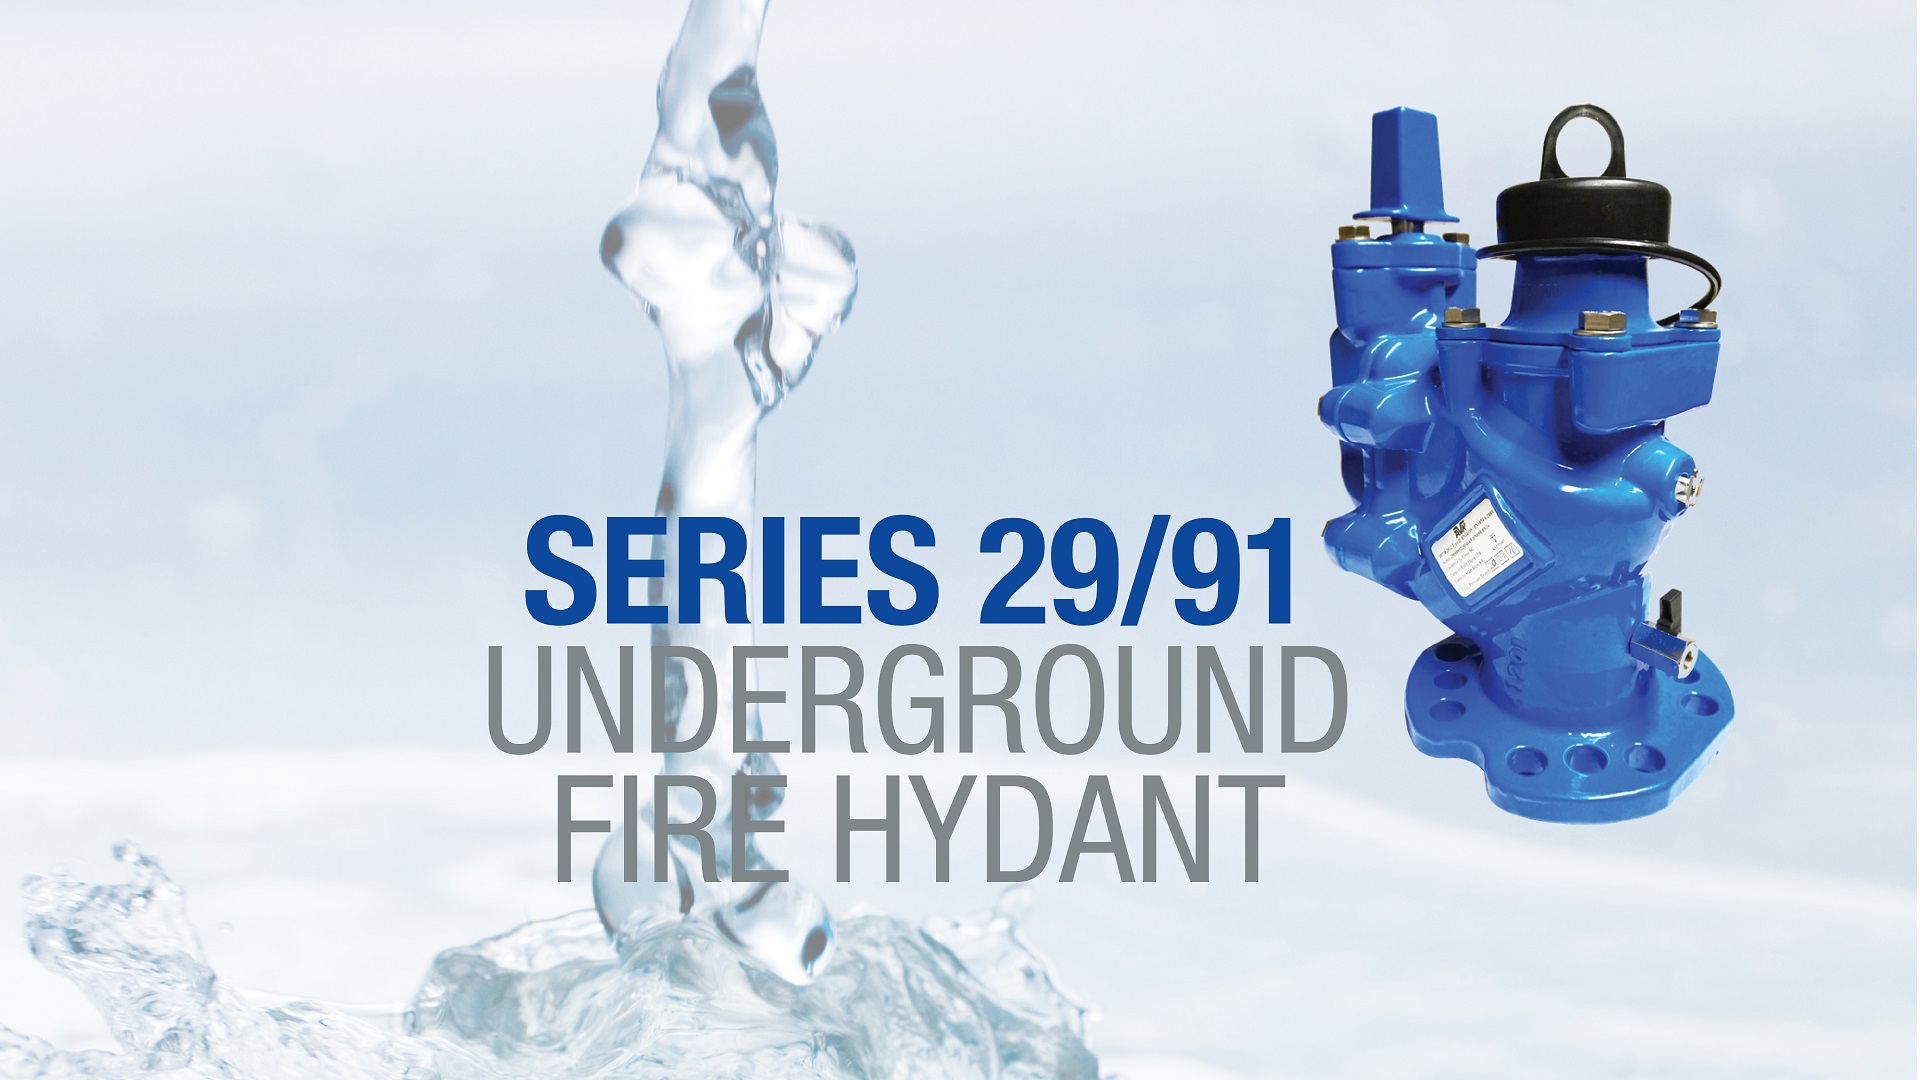 Series 29 91 Hydrant